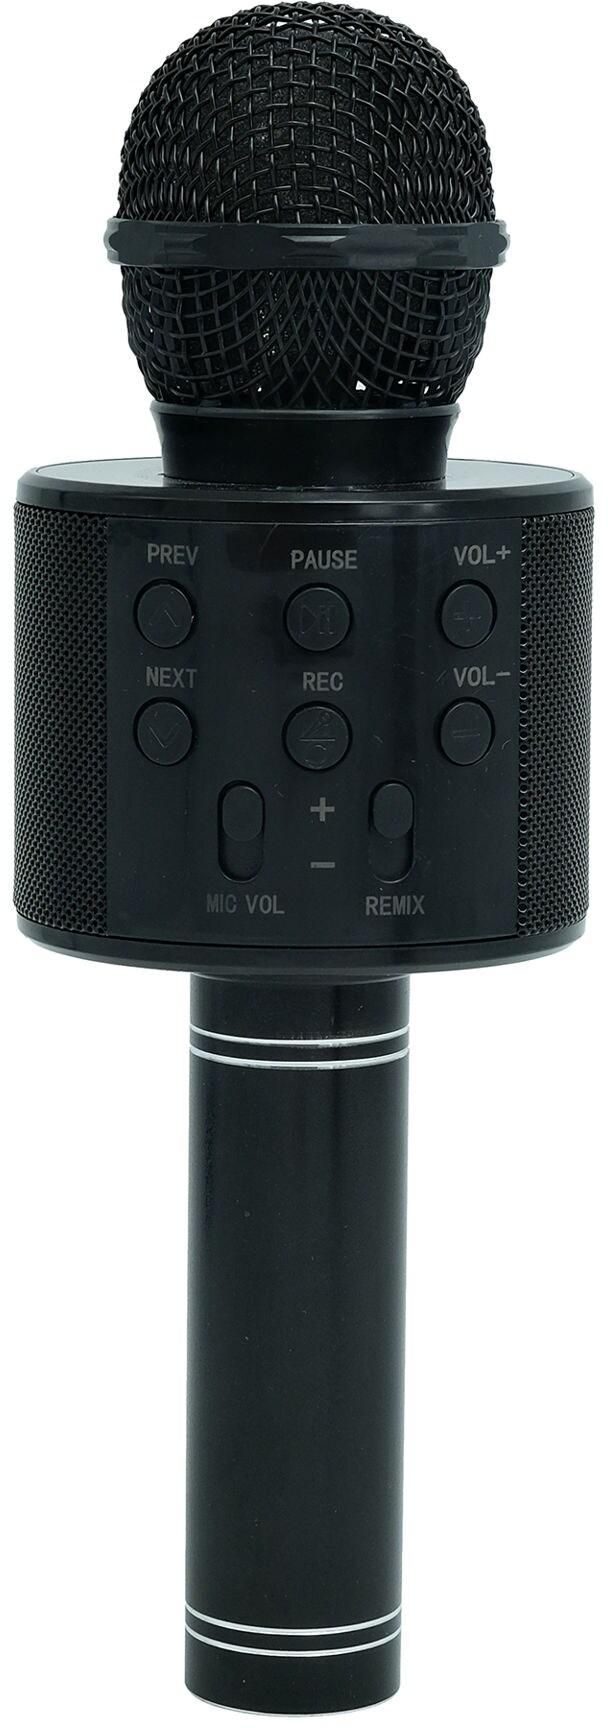 HandHeld KTV Wireless Microphone HIFI Speaker, Black